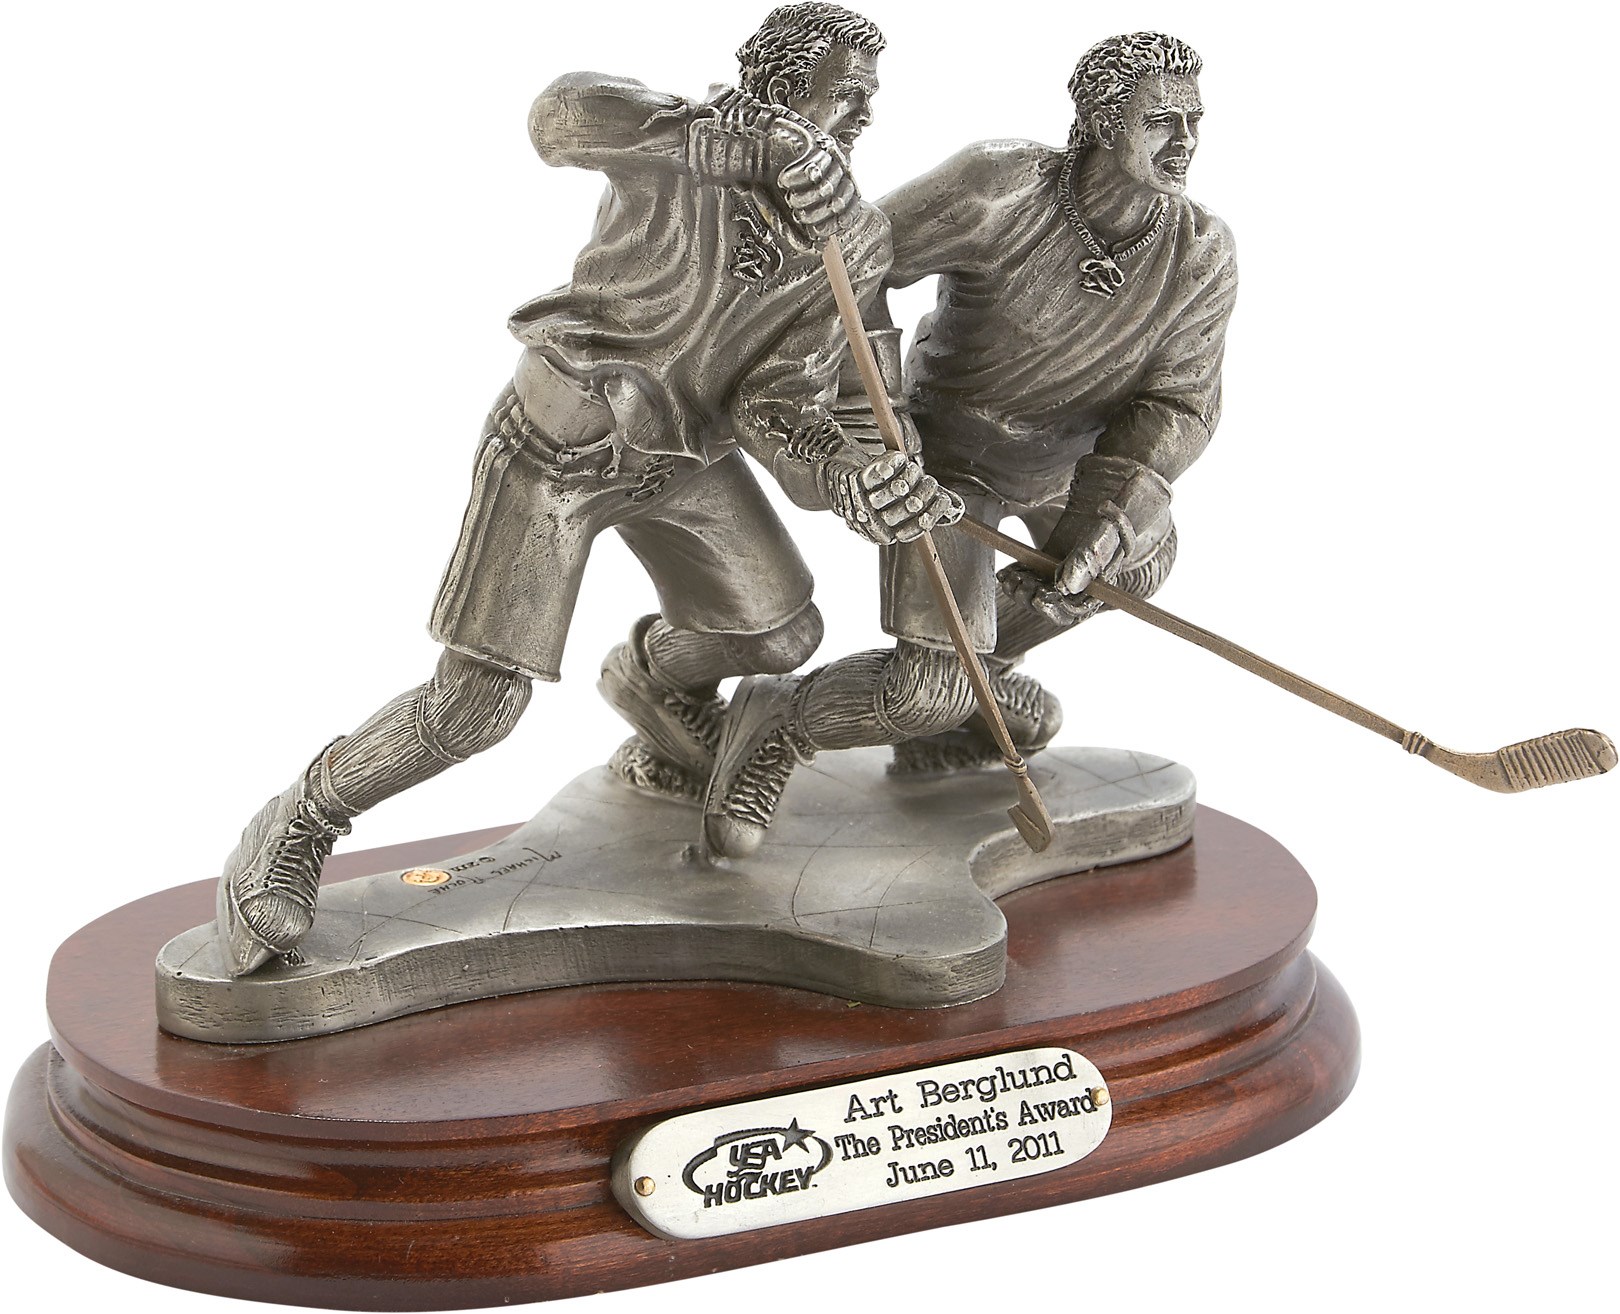 The Art Berglund USA Hockey Collection - 2011 USA Hockey President's Award Presented to Art Berglund